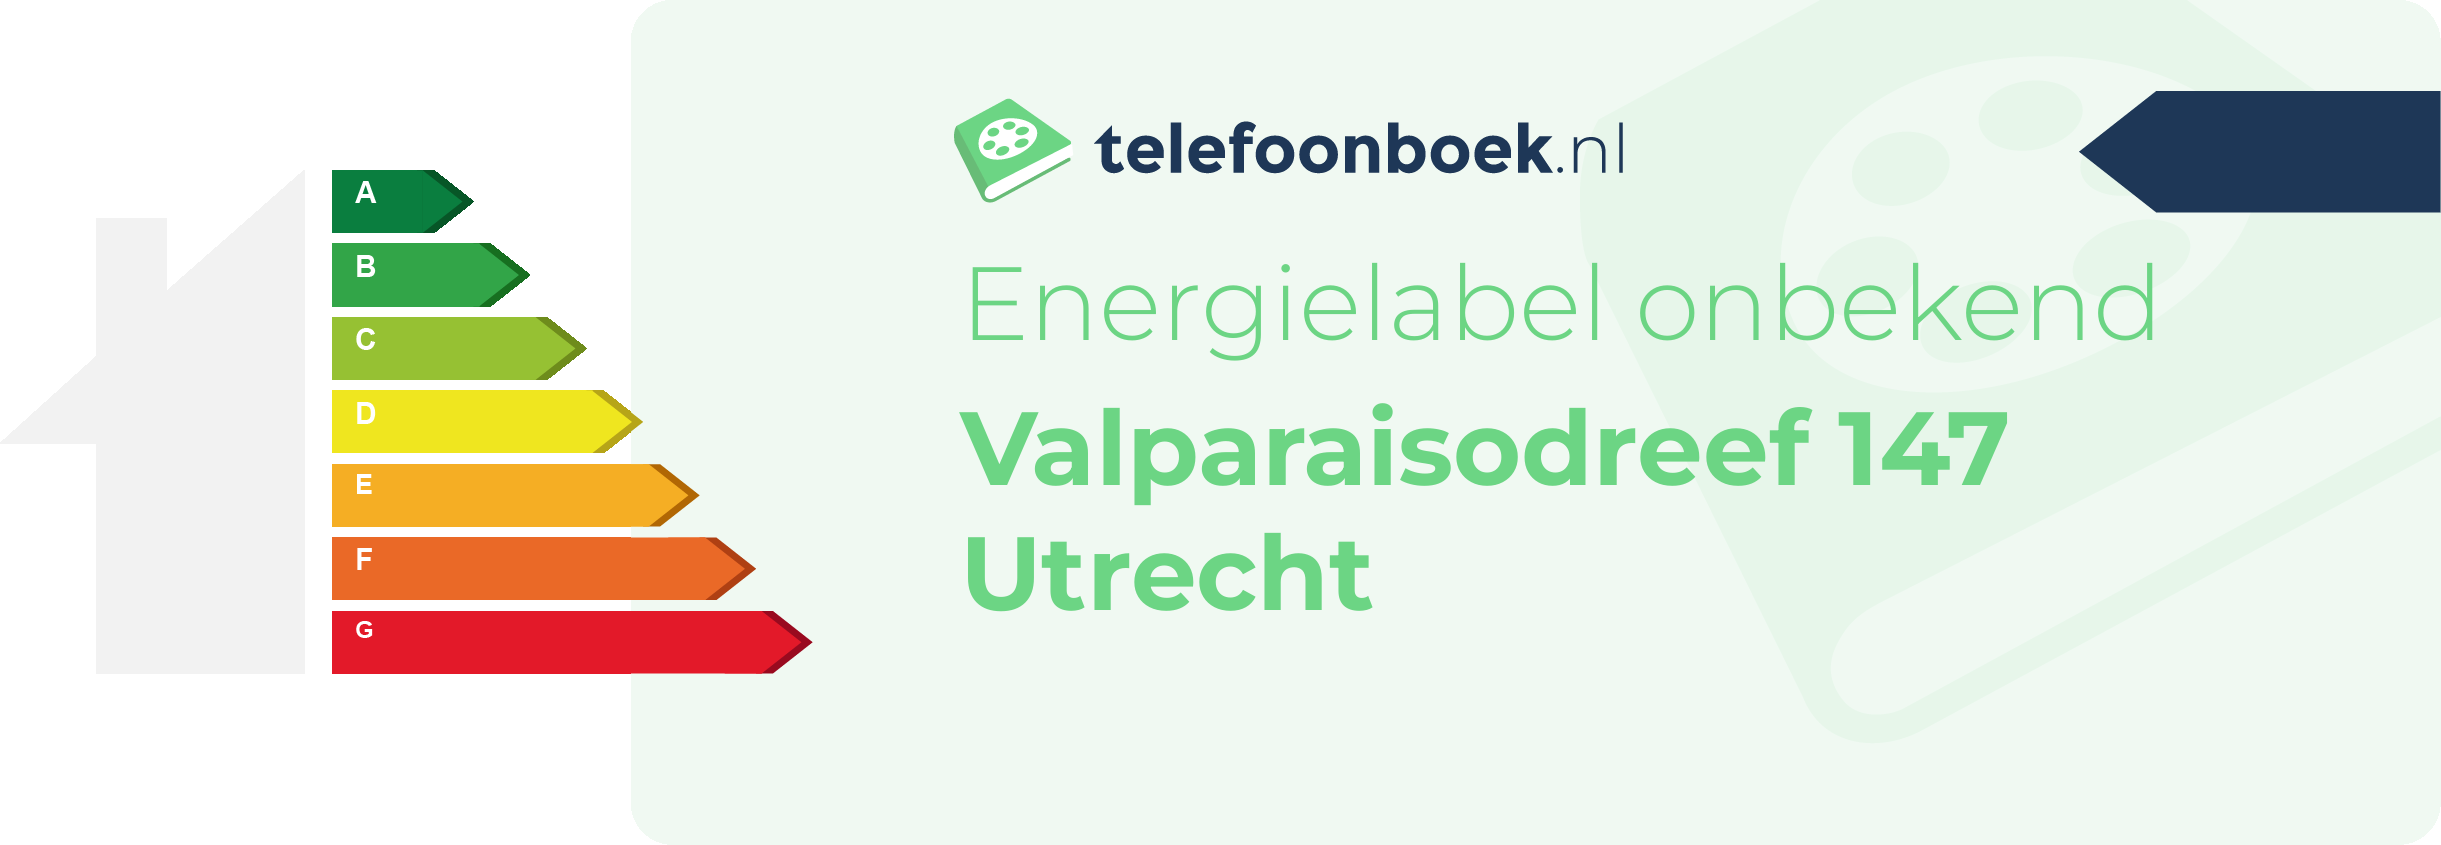 Energielabel Valparaisodreef 147 Utrecht